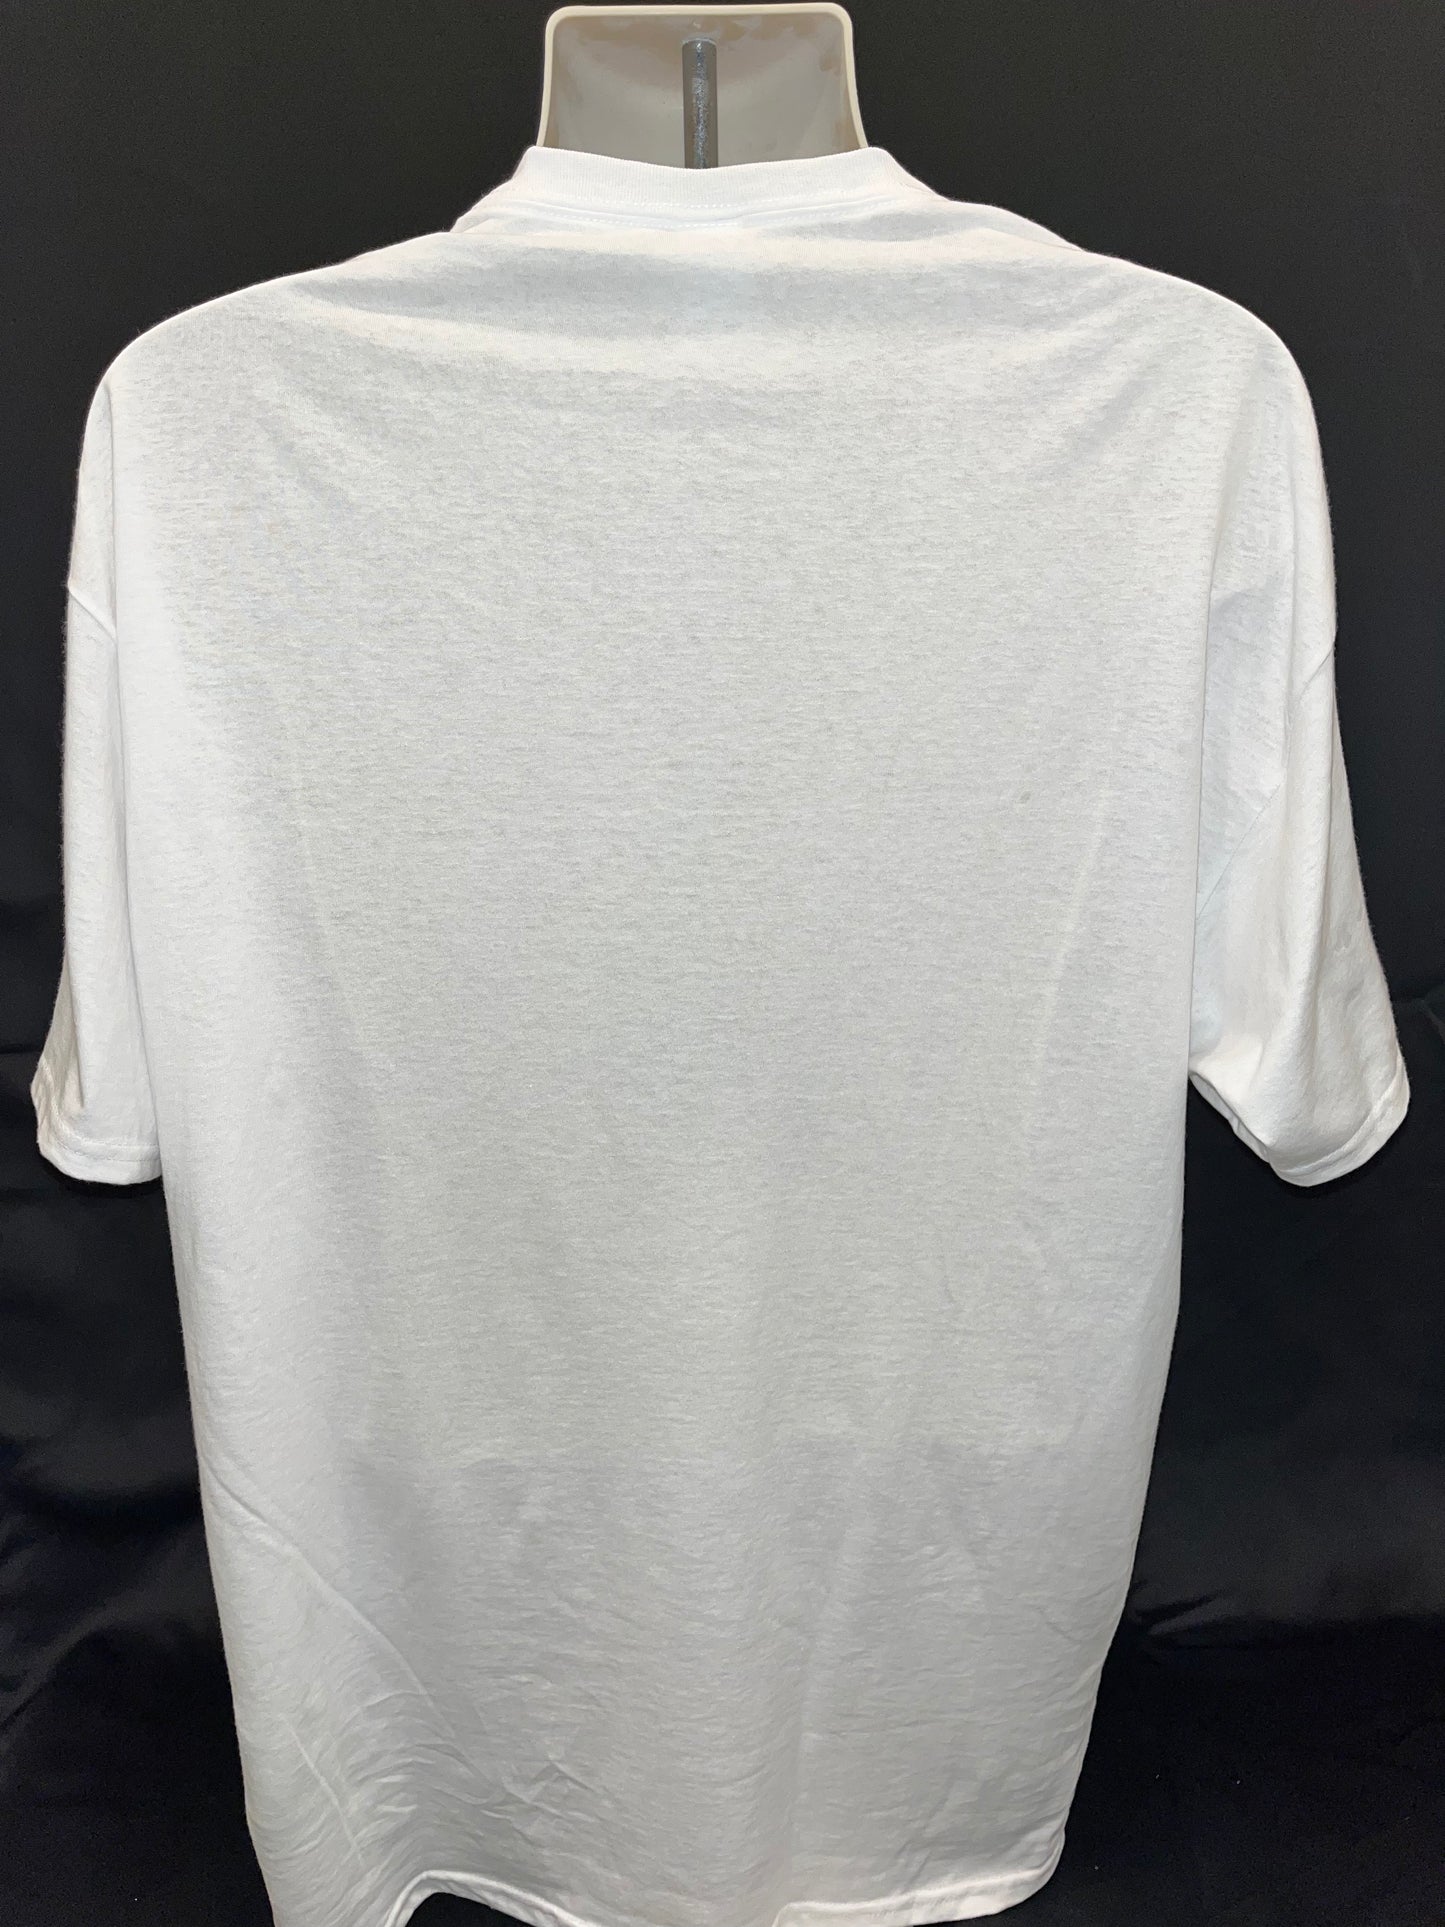 Uniites™ delisheOso™ Brand Apparel, Hanes Unisex Pre-washed T-Shirt, 100% Cotton, White, XL, $19.91